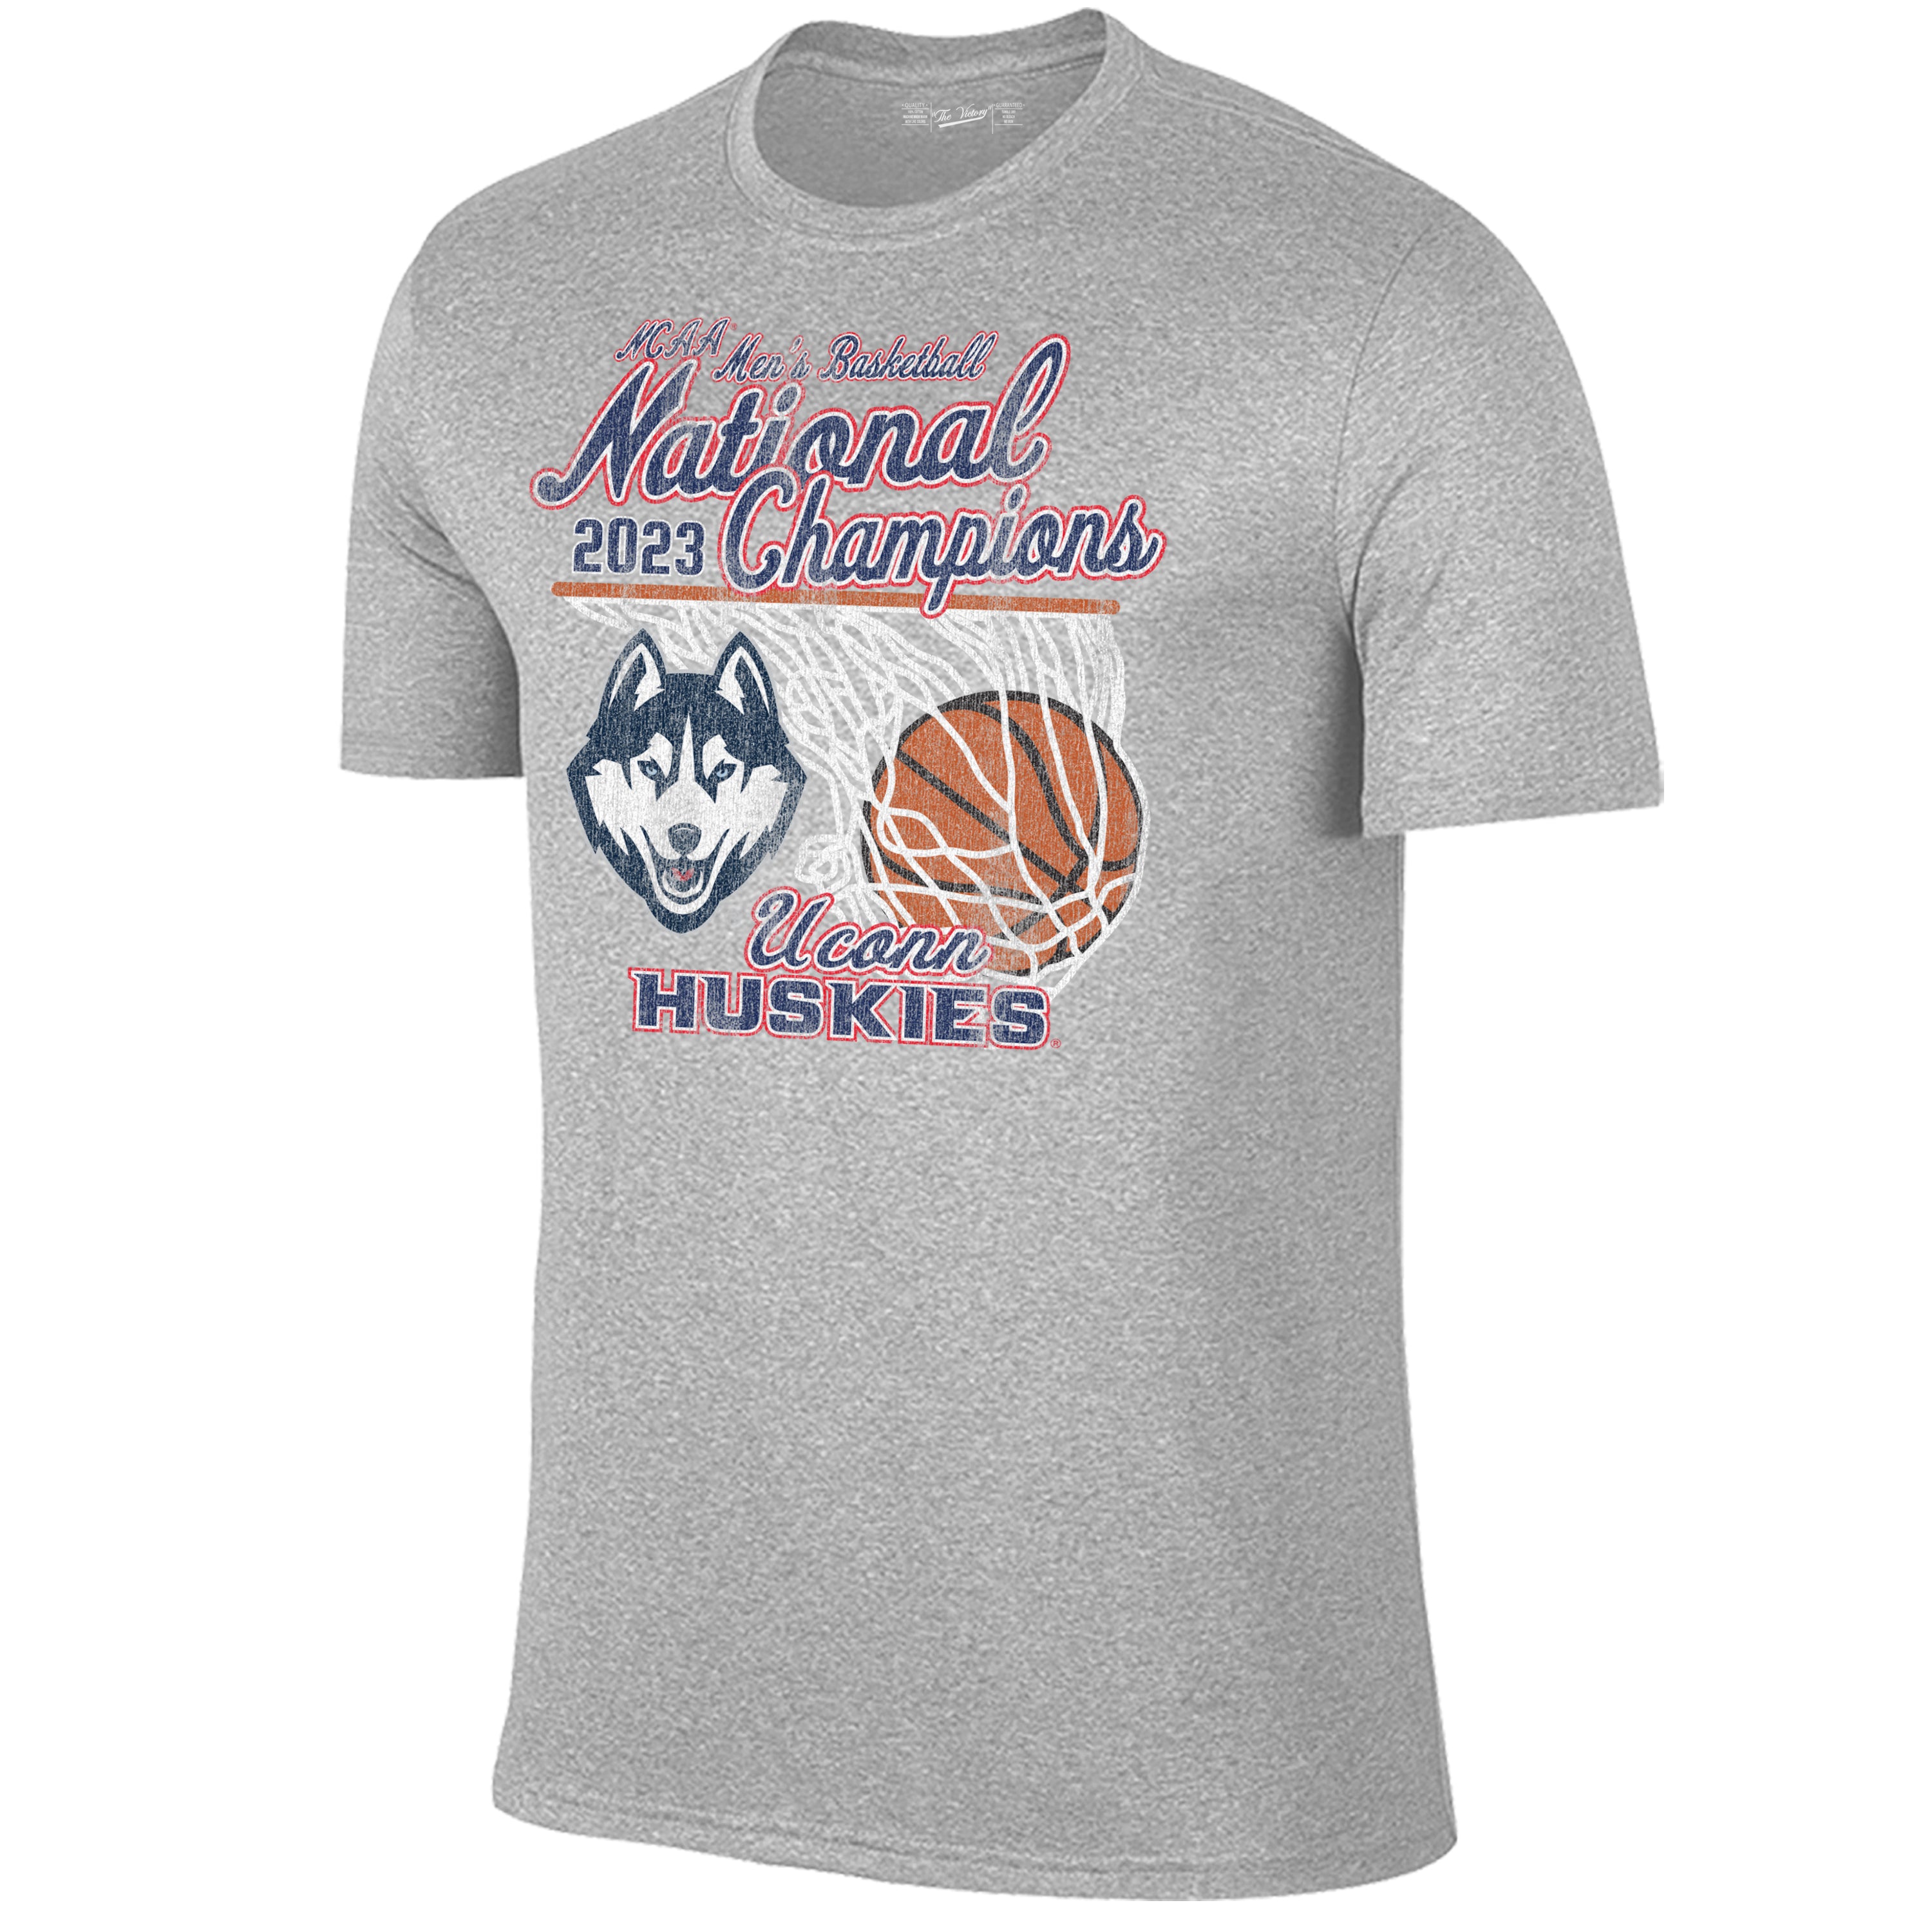 UConn Huskies volleyball apparel